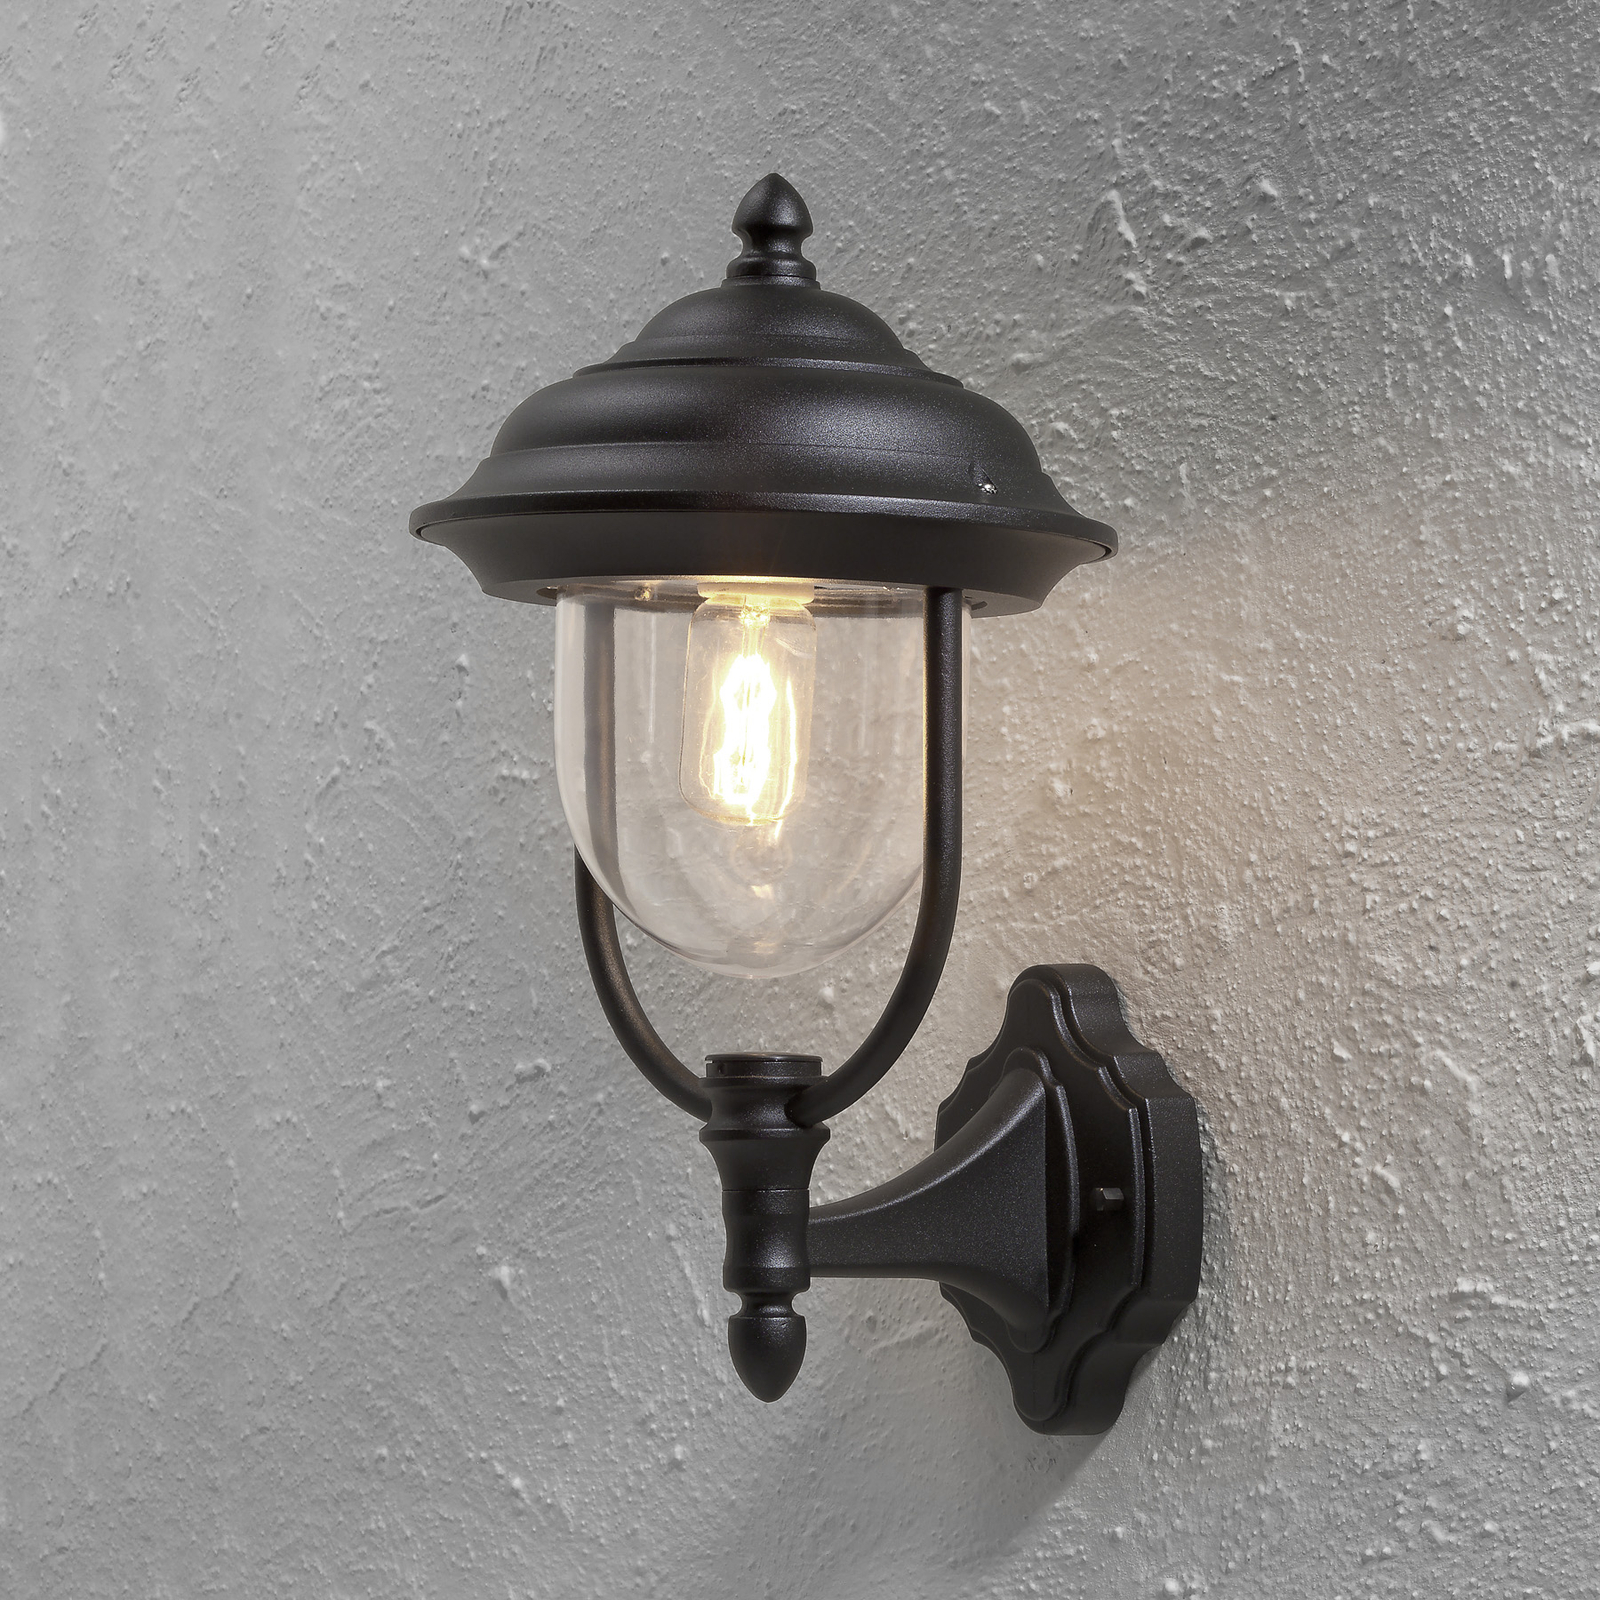 Parma outdoor wall light, standing lantern, black